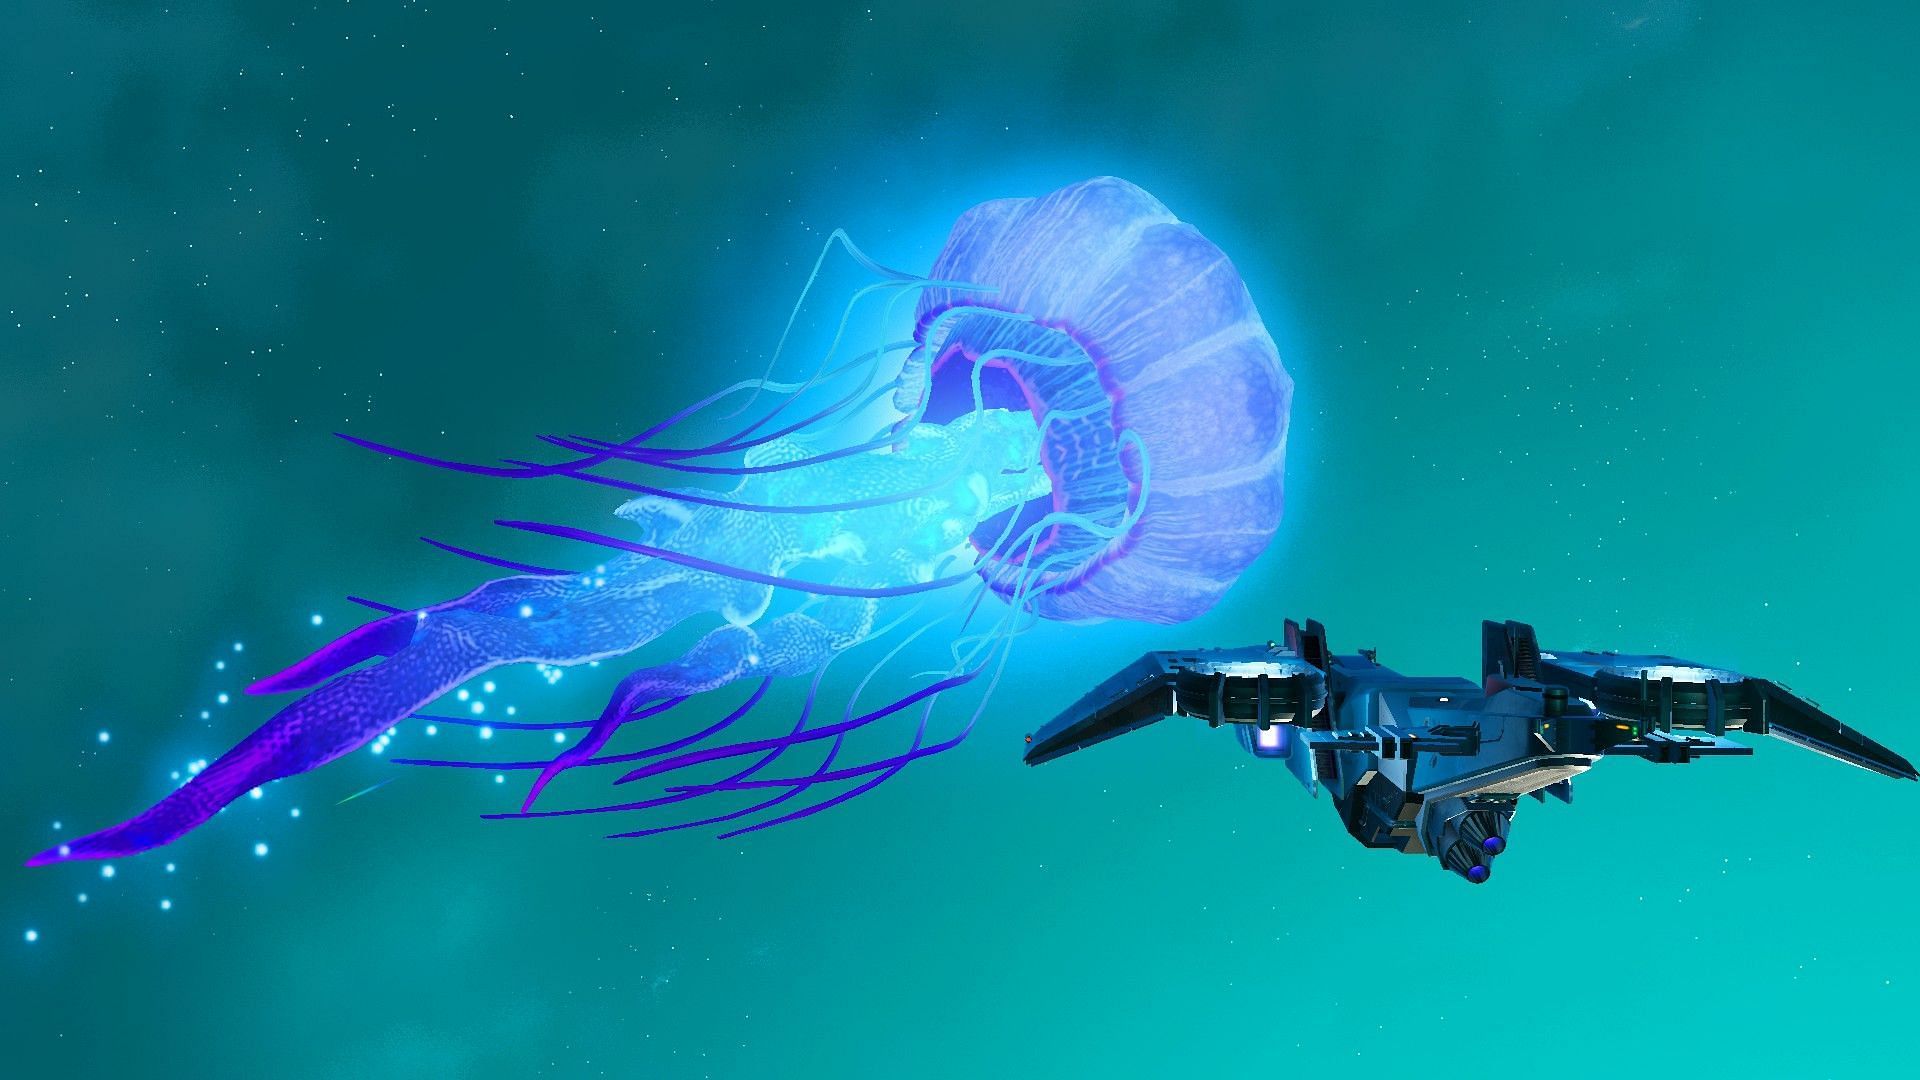 Fellow traveler - A space jellyfish (Image via No Man&rsquo;s Sky)